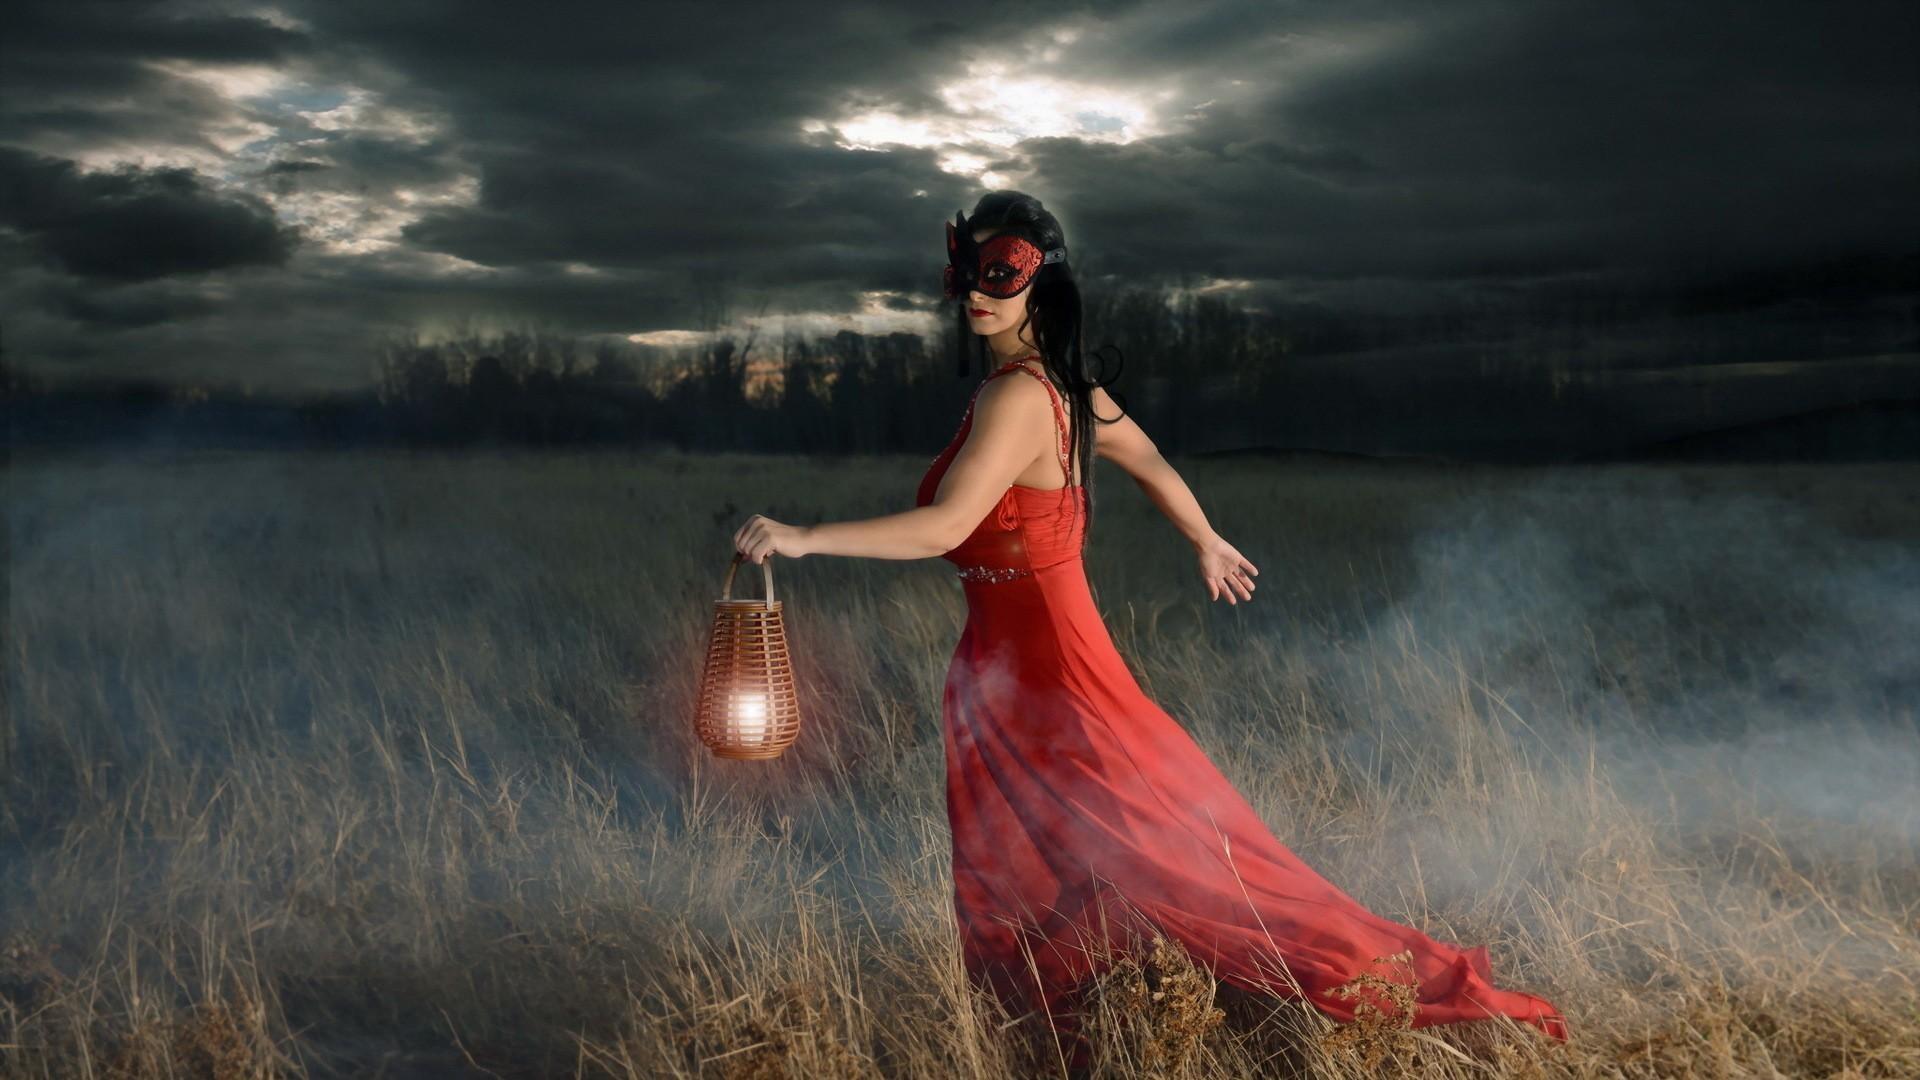 Download 1920x1080 HD Wallpaper lady red dress field lantern